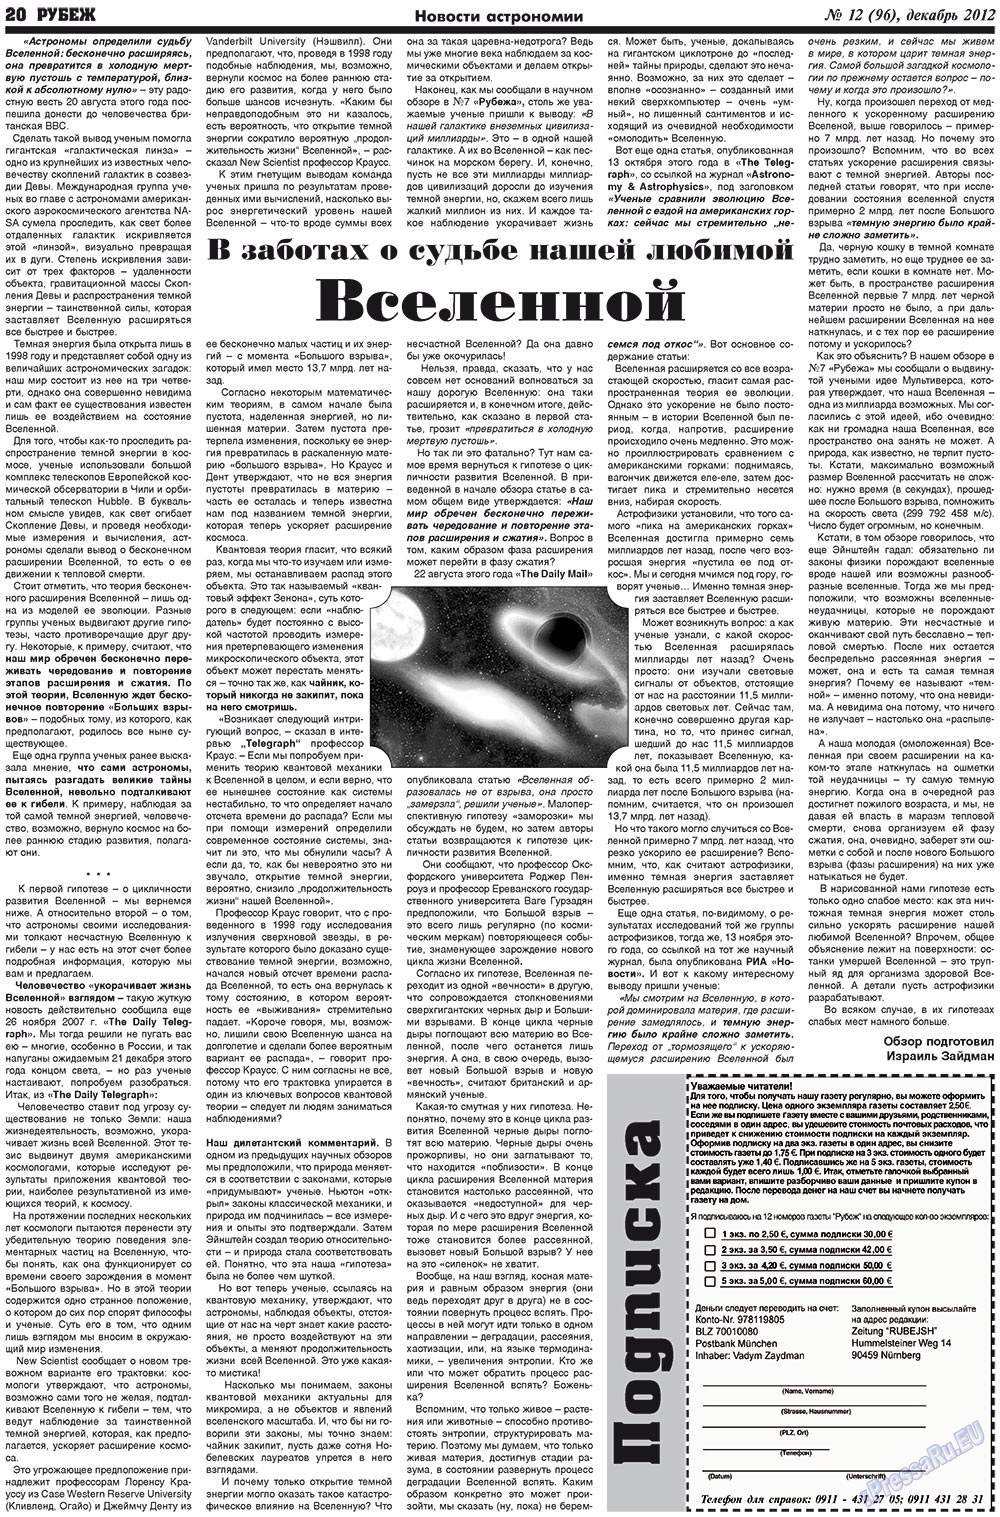 Рубеж, газета. 2012 №12 стр.20